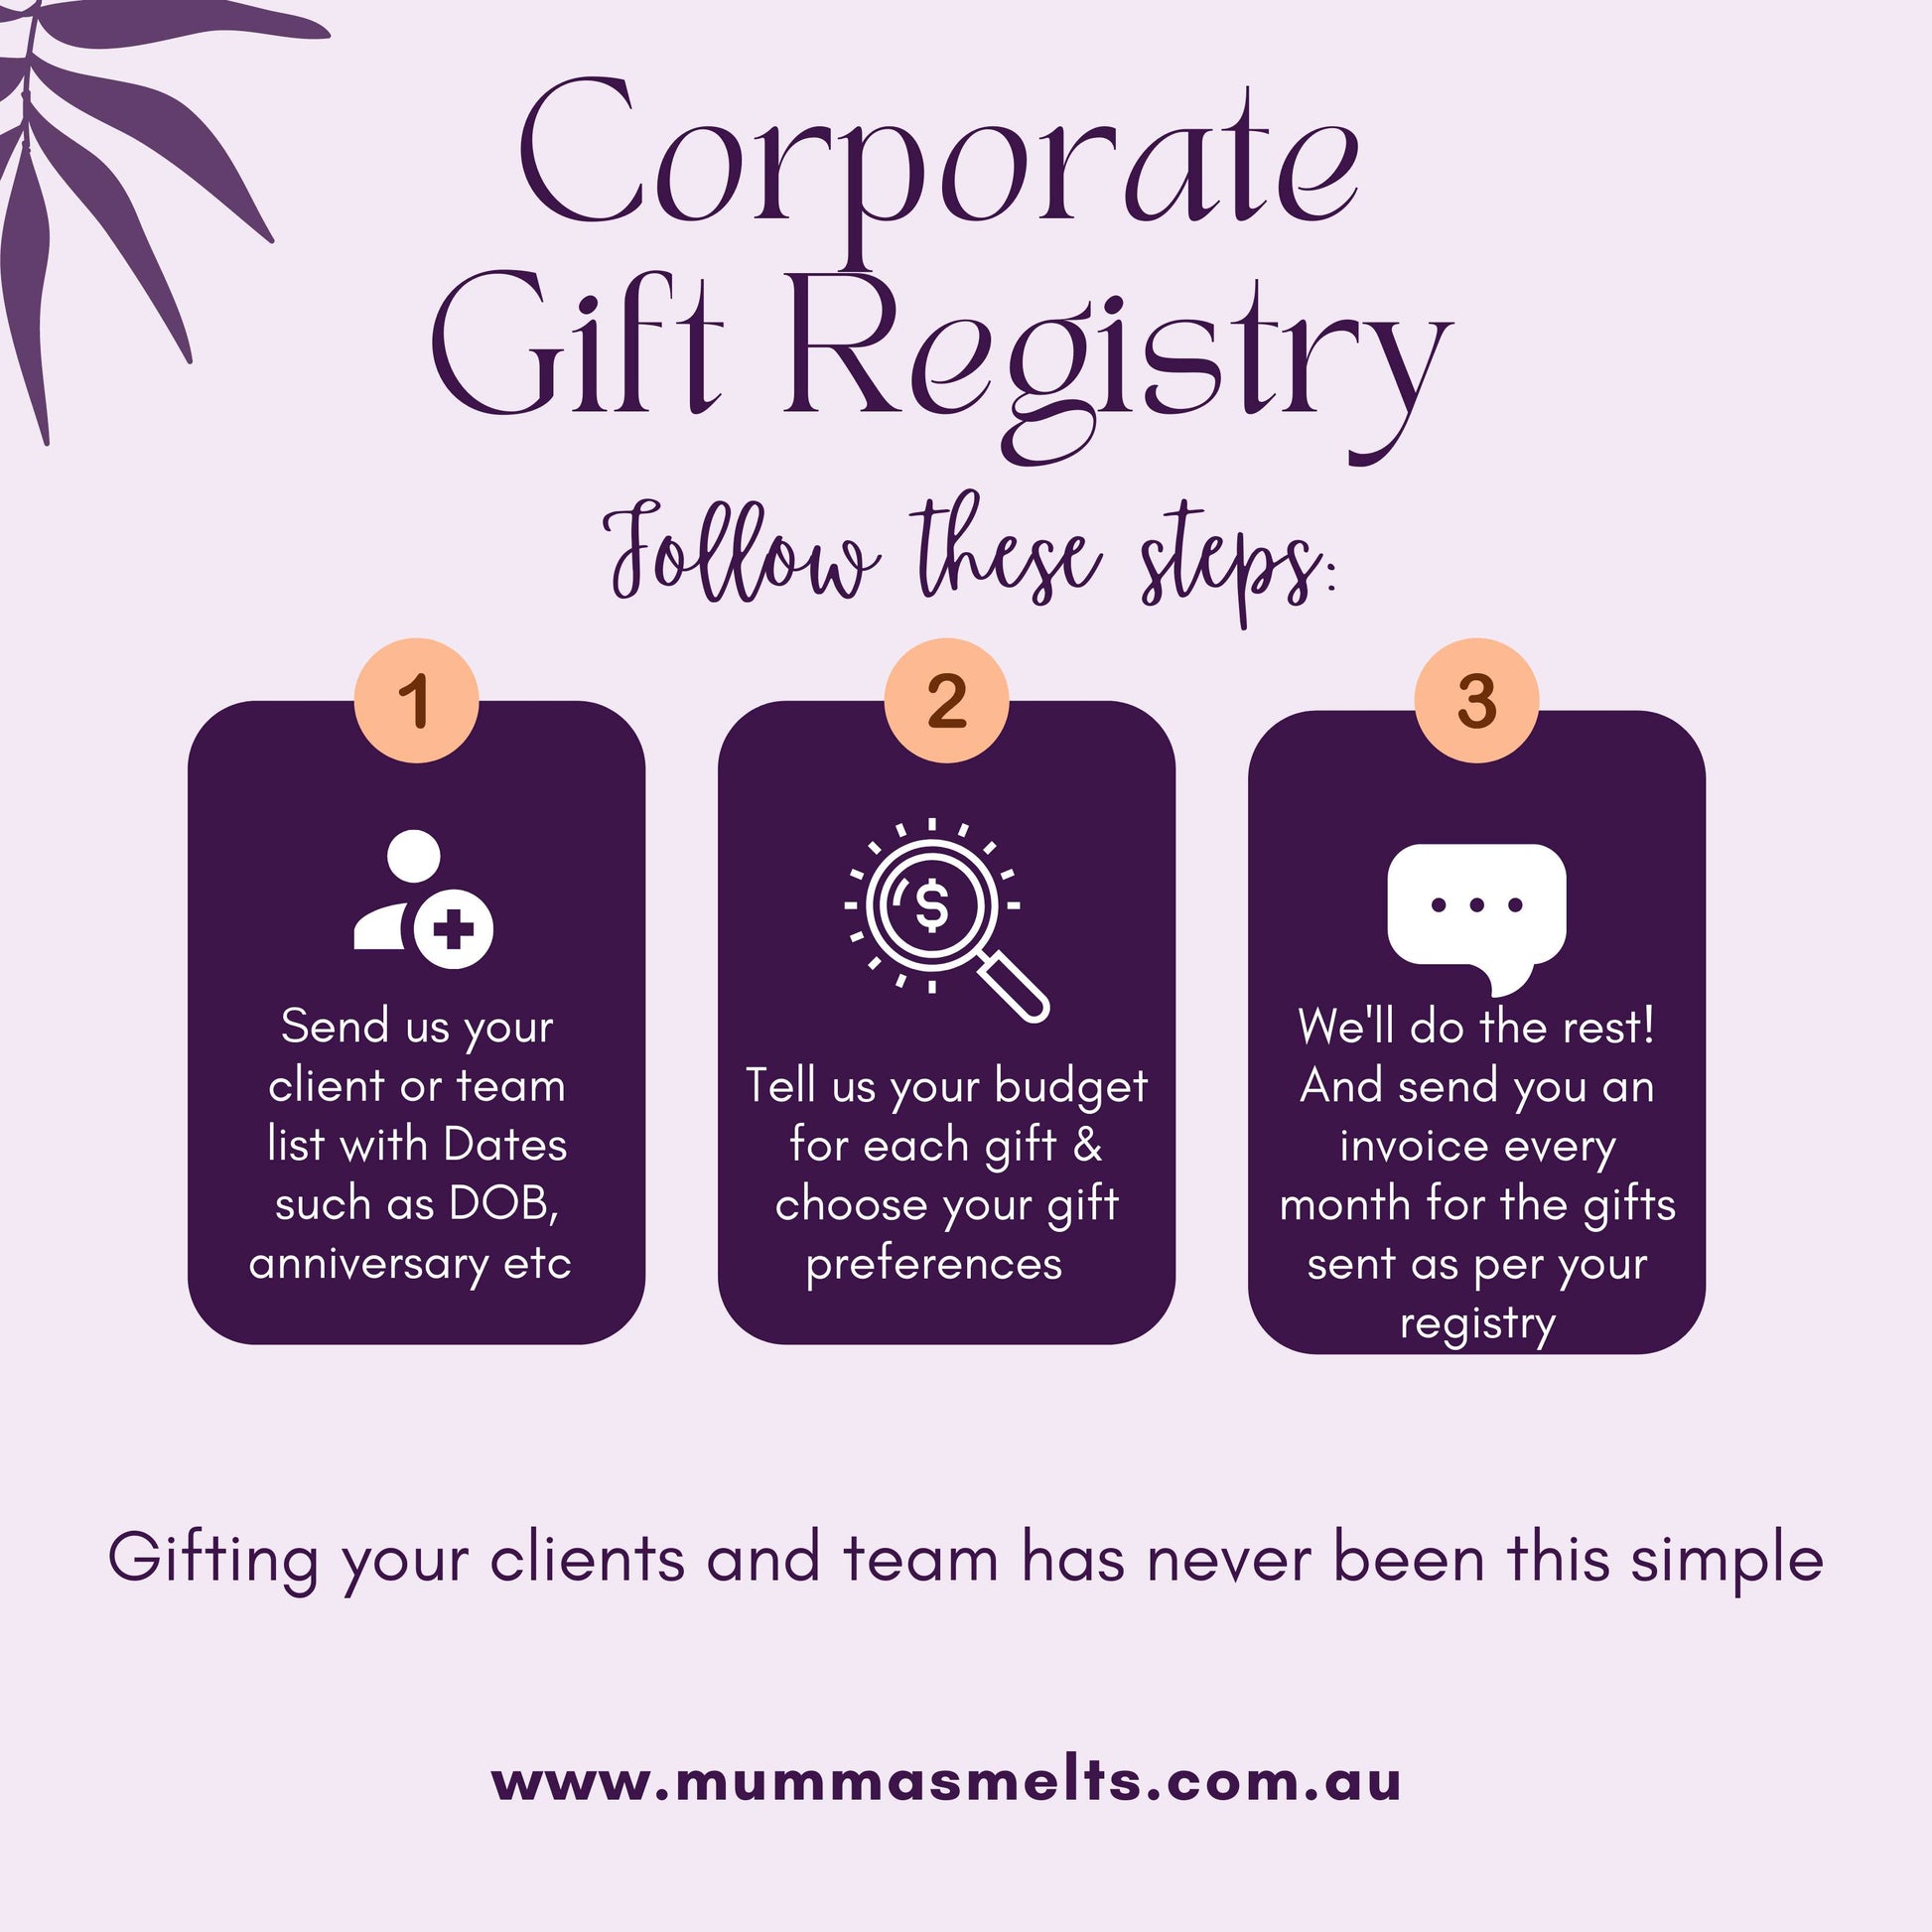 Corporate Gift Registry - Upload Your Recipient List - Mumma's Melts 